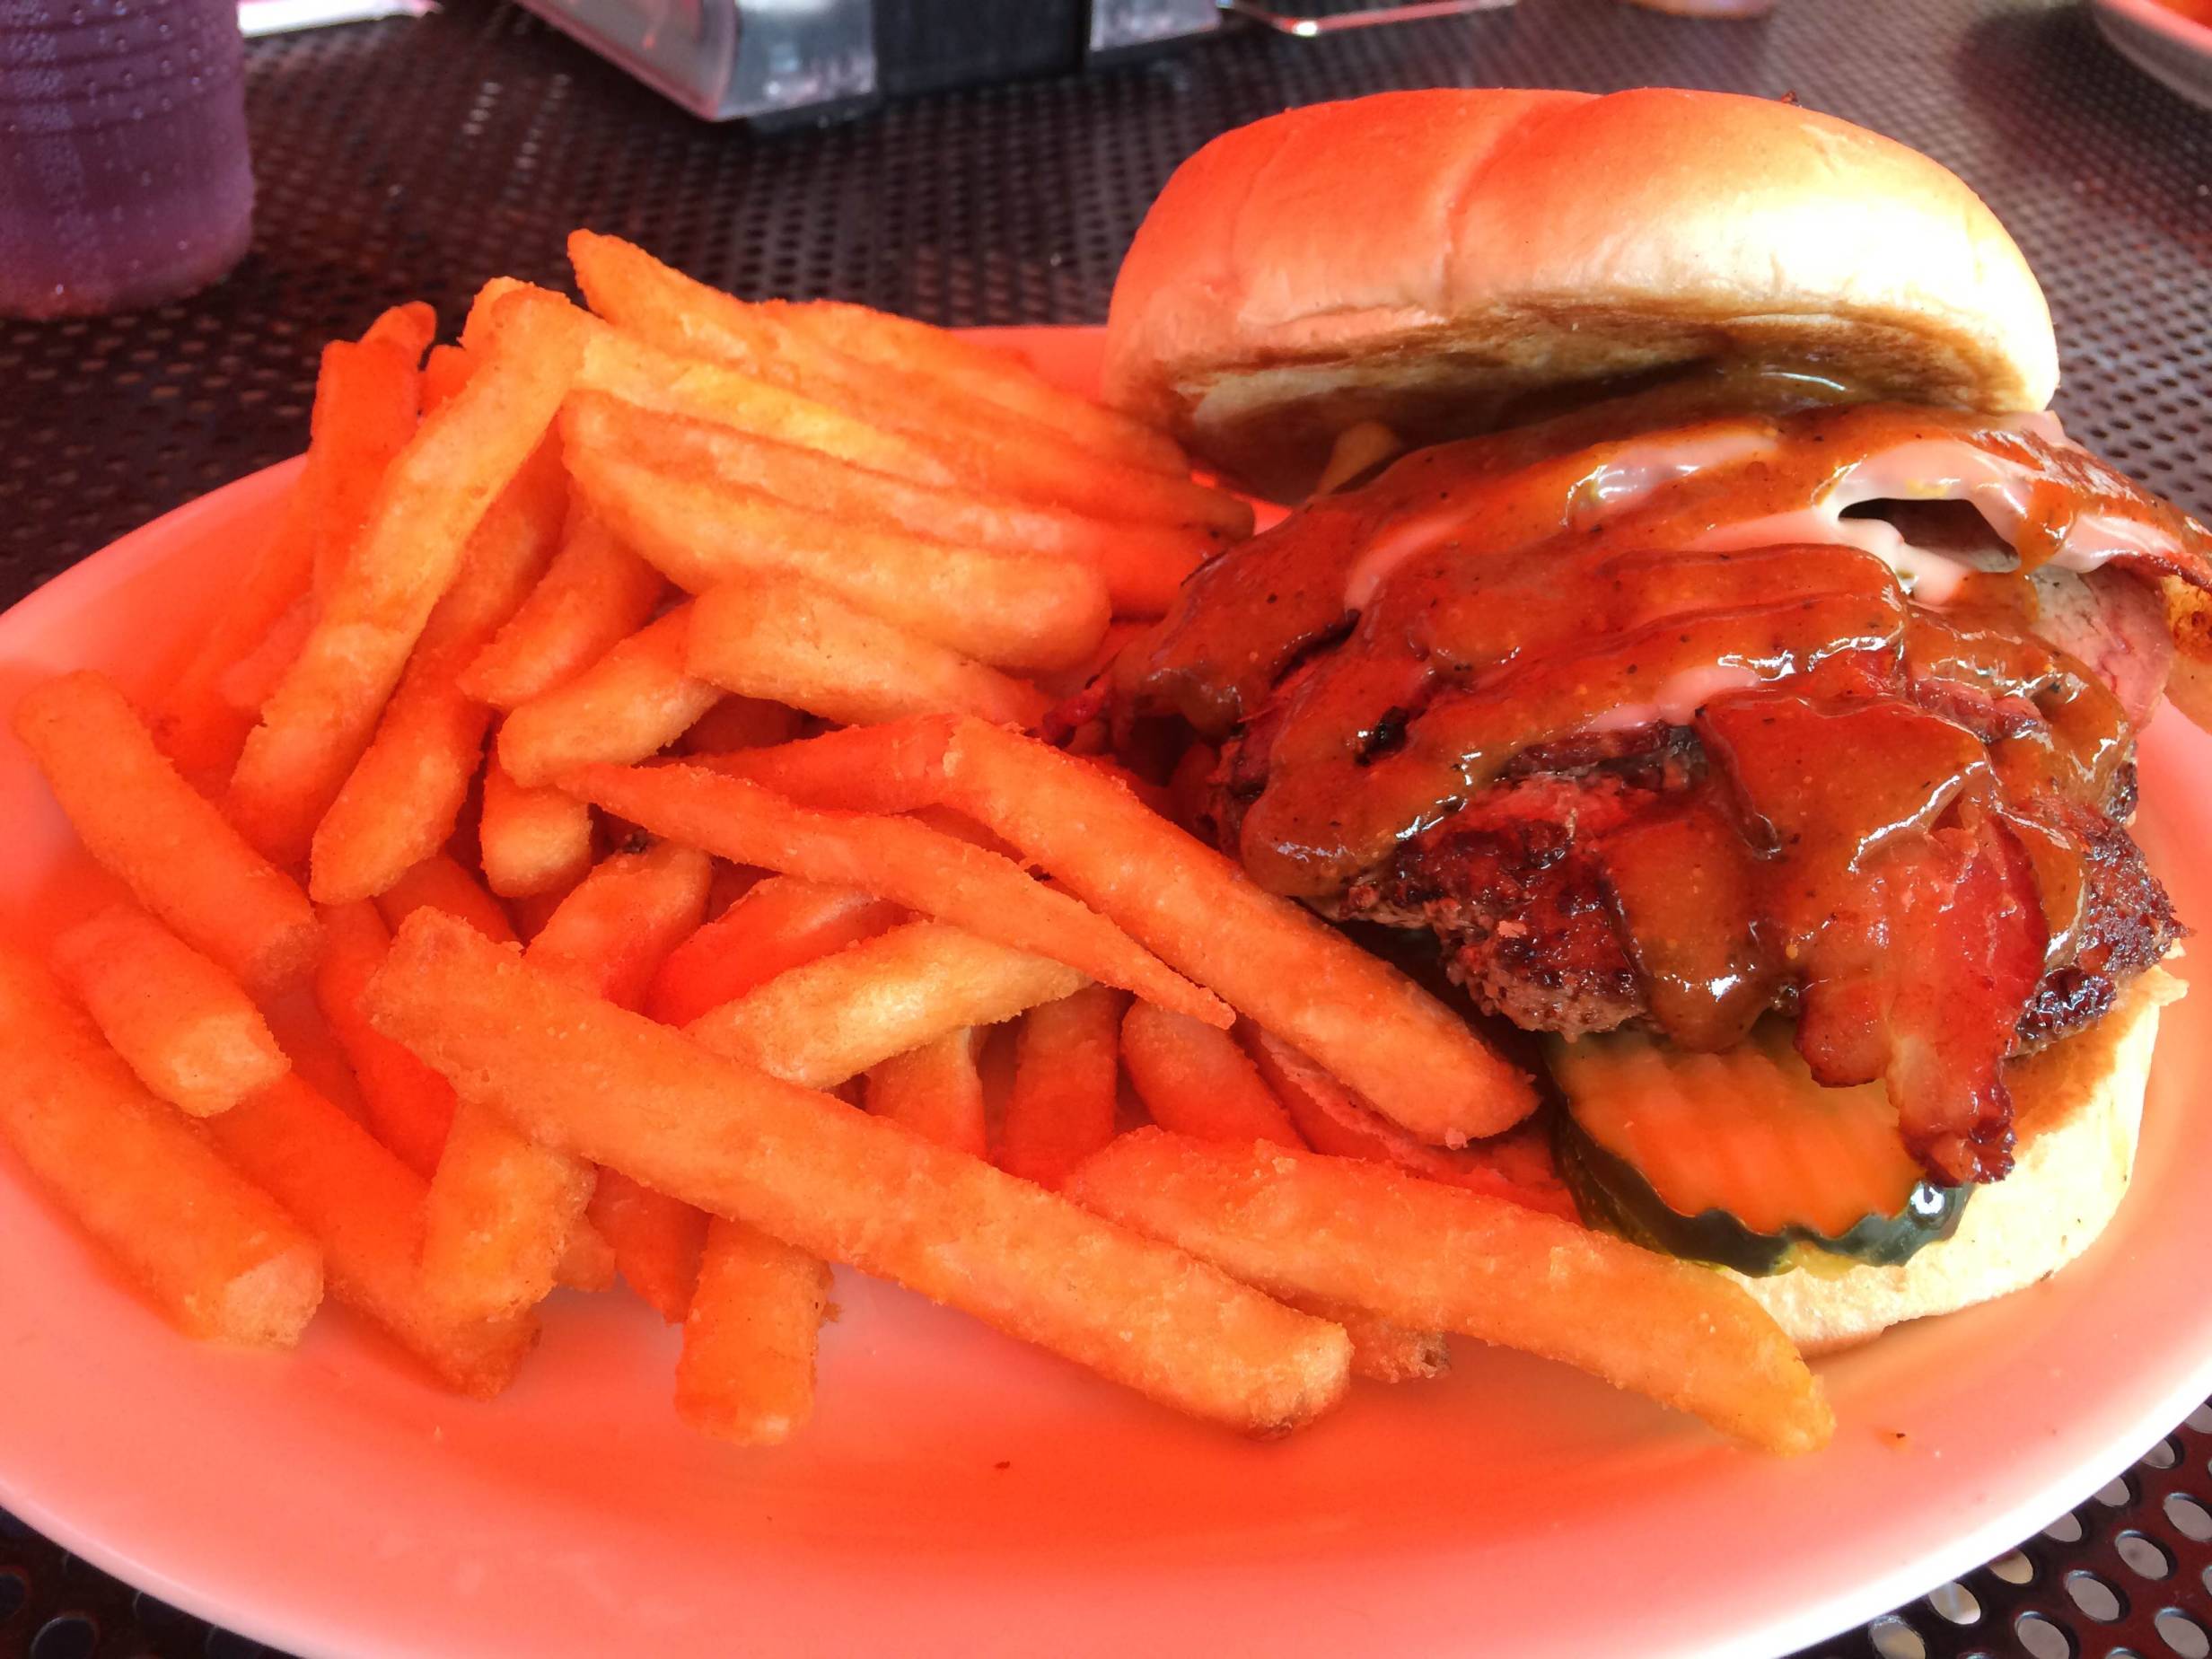 Top your burger with brisket at Joe’s